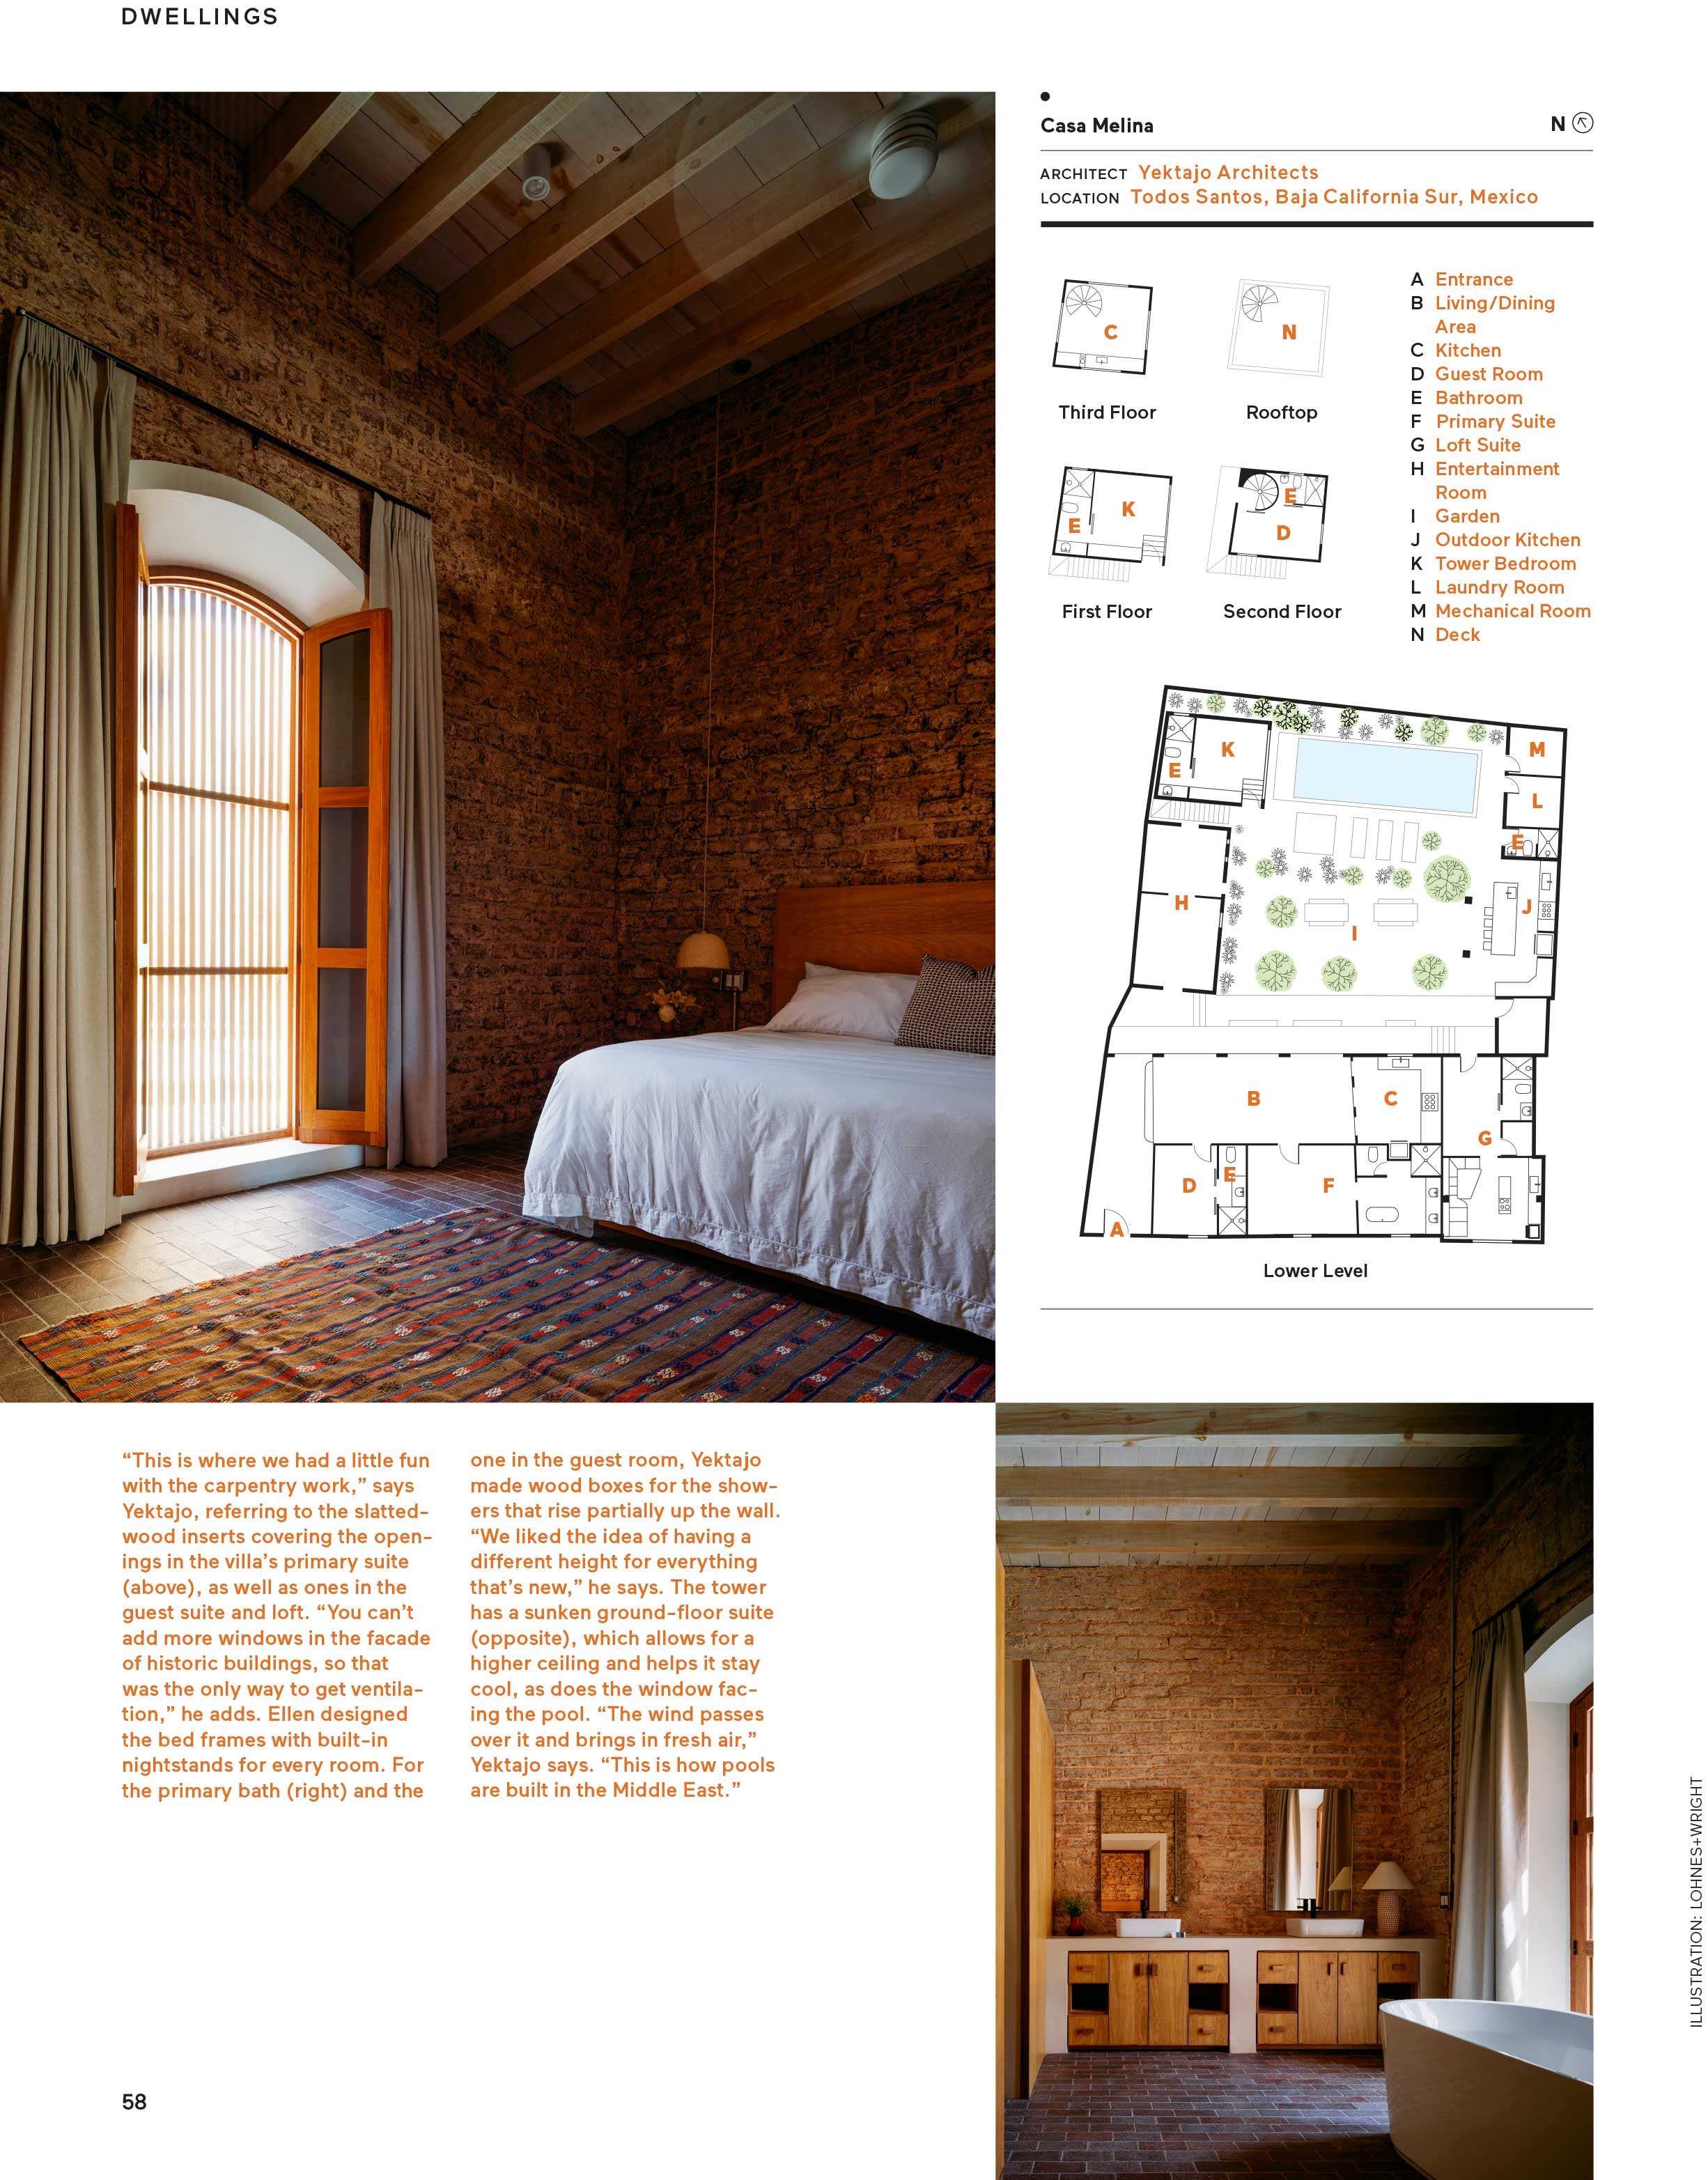 Casa-Melina---Dwell-Magazine-8.jpg